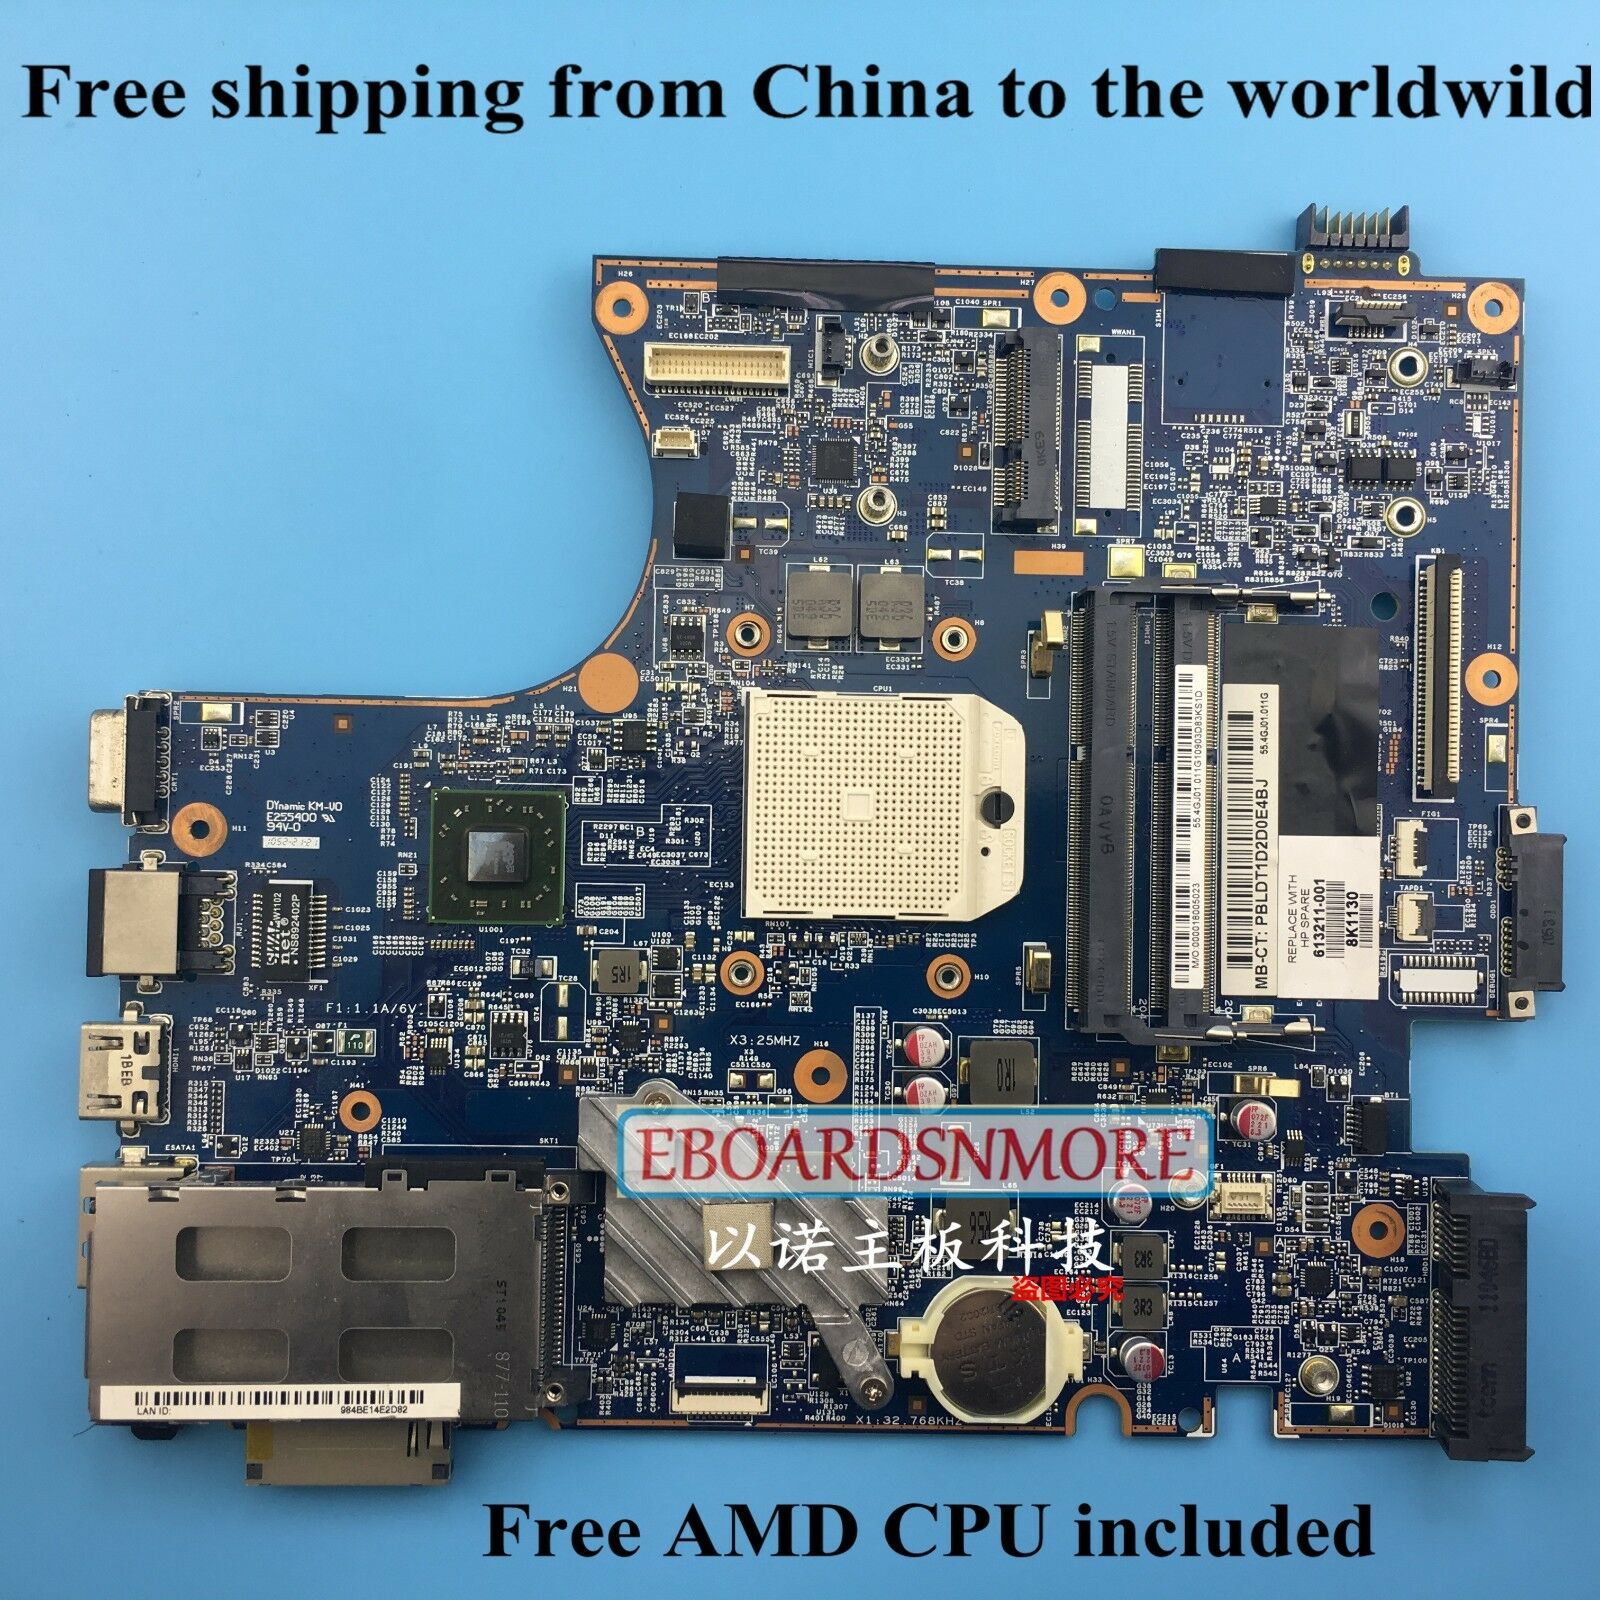 HP ProBook 4525s 613211-001 AMD laptop motherboard,main board, free CPU "A" Compatible CPU Brand: AMD Featu - Click Image to Close